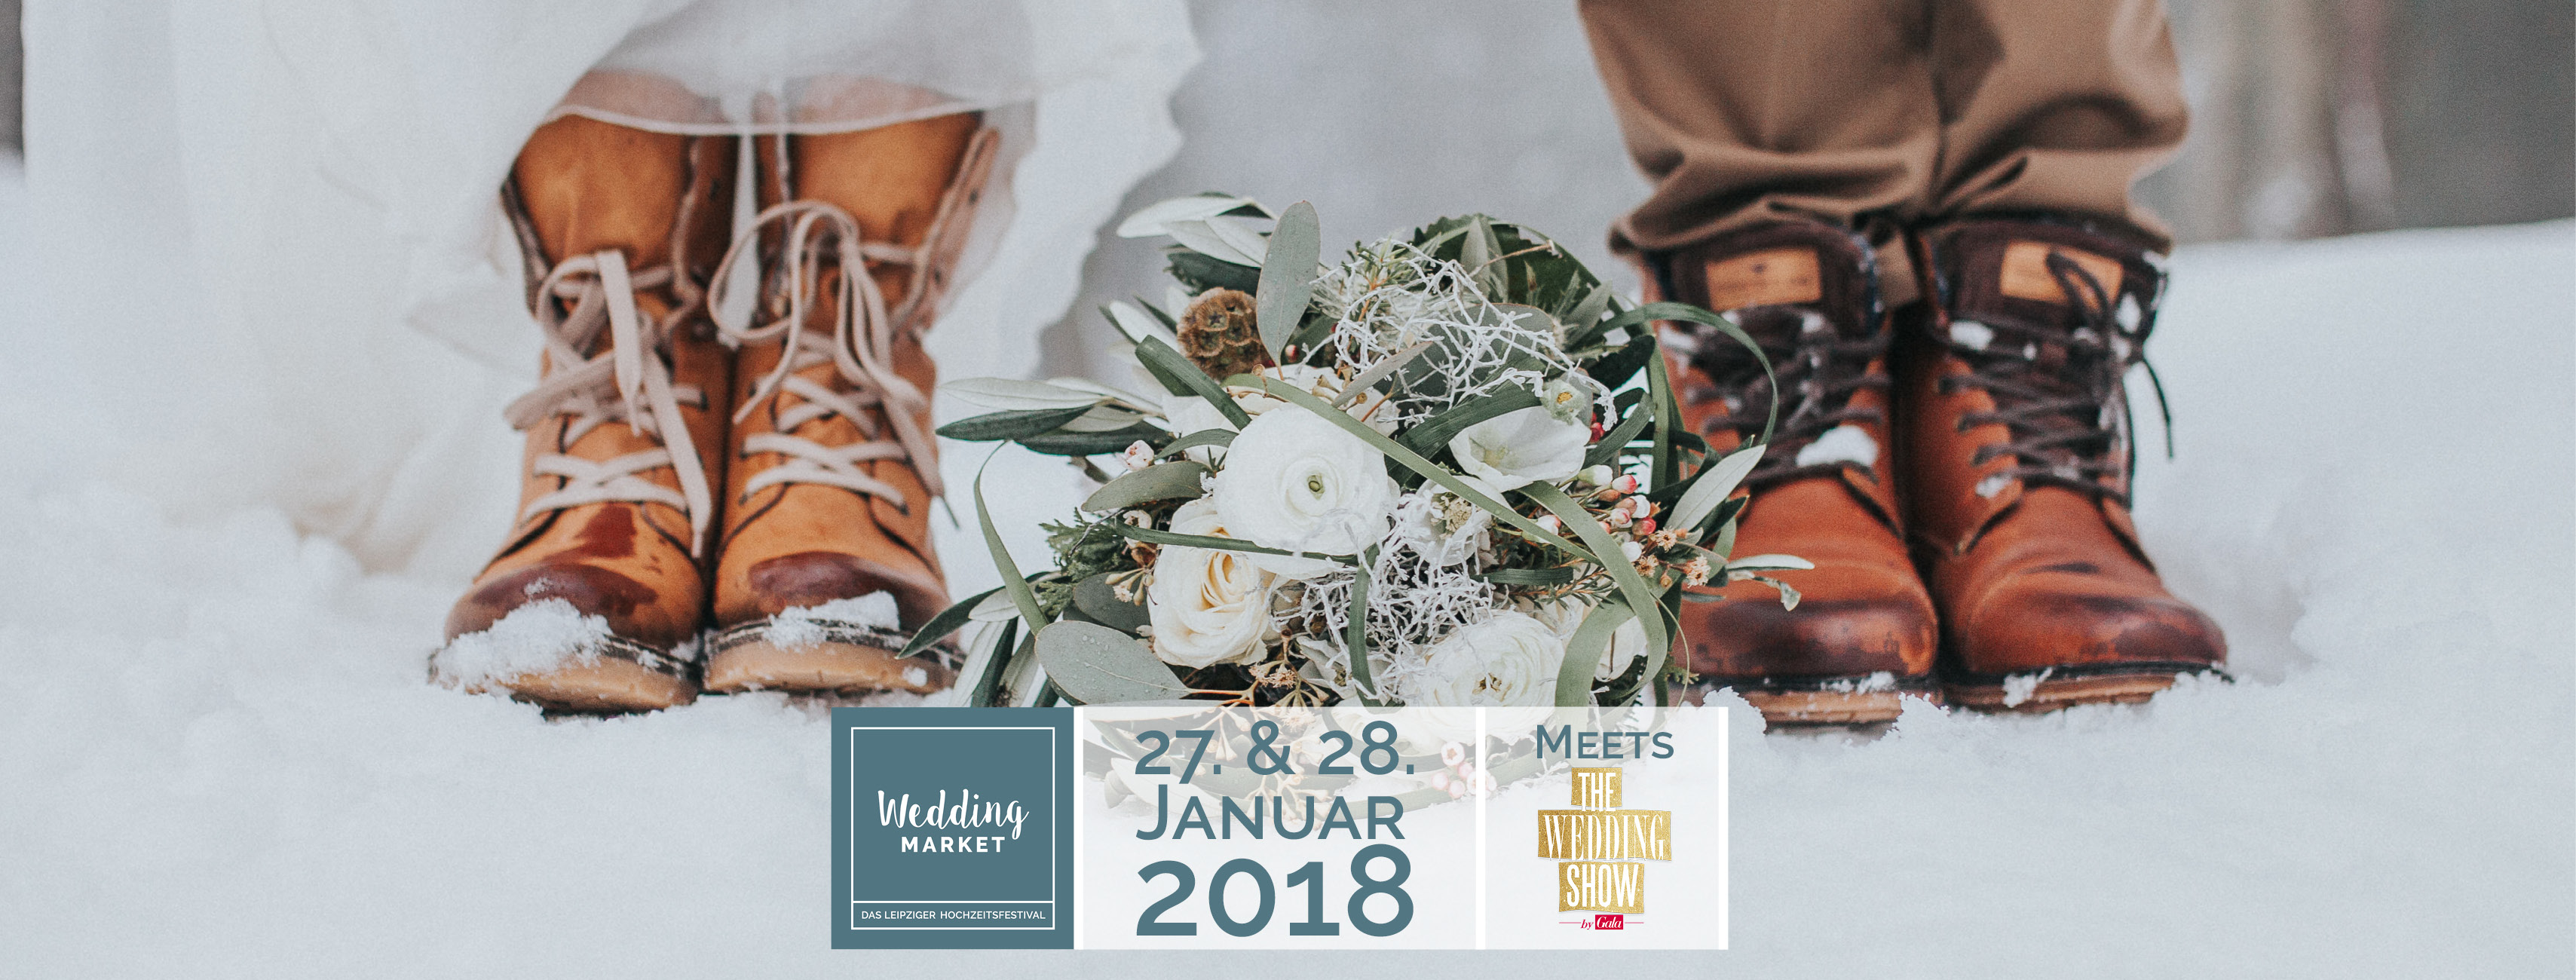 Wedding Market 2018